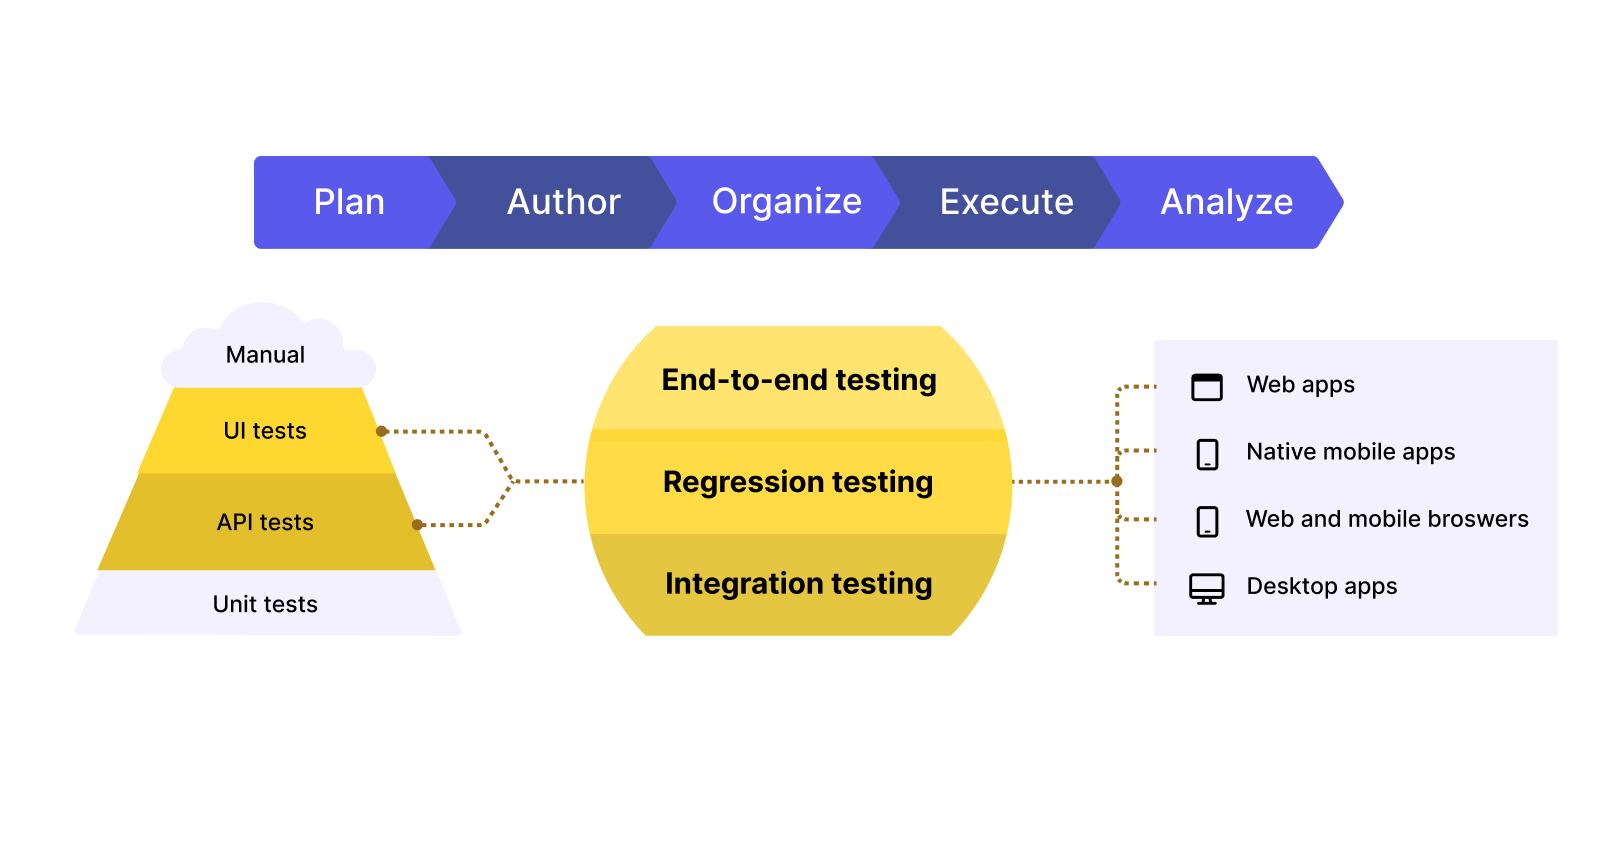 Katalon supports functional testing, UI testing, and integration testing for web, mobile, API, and desktop app